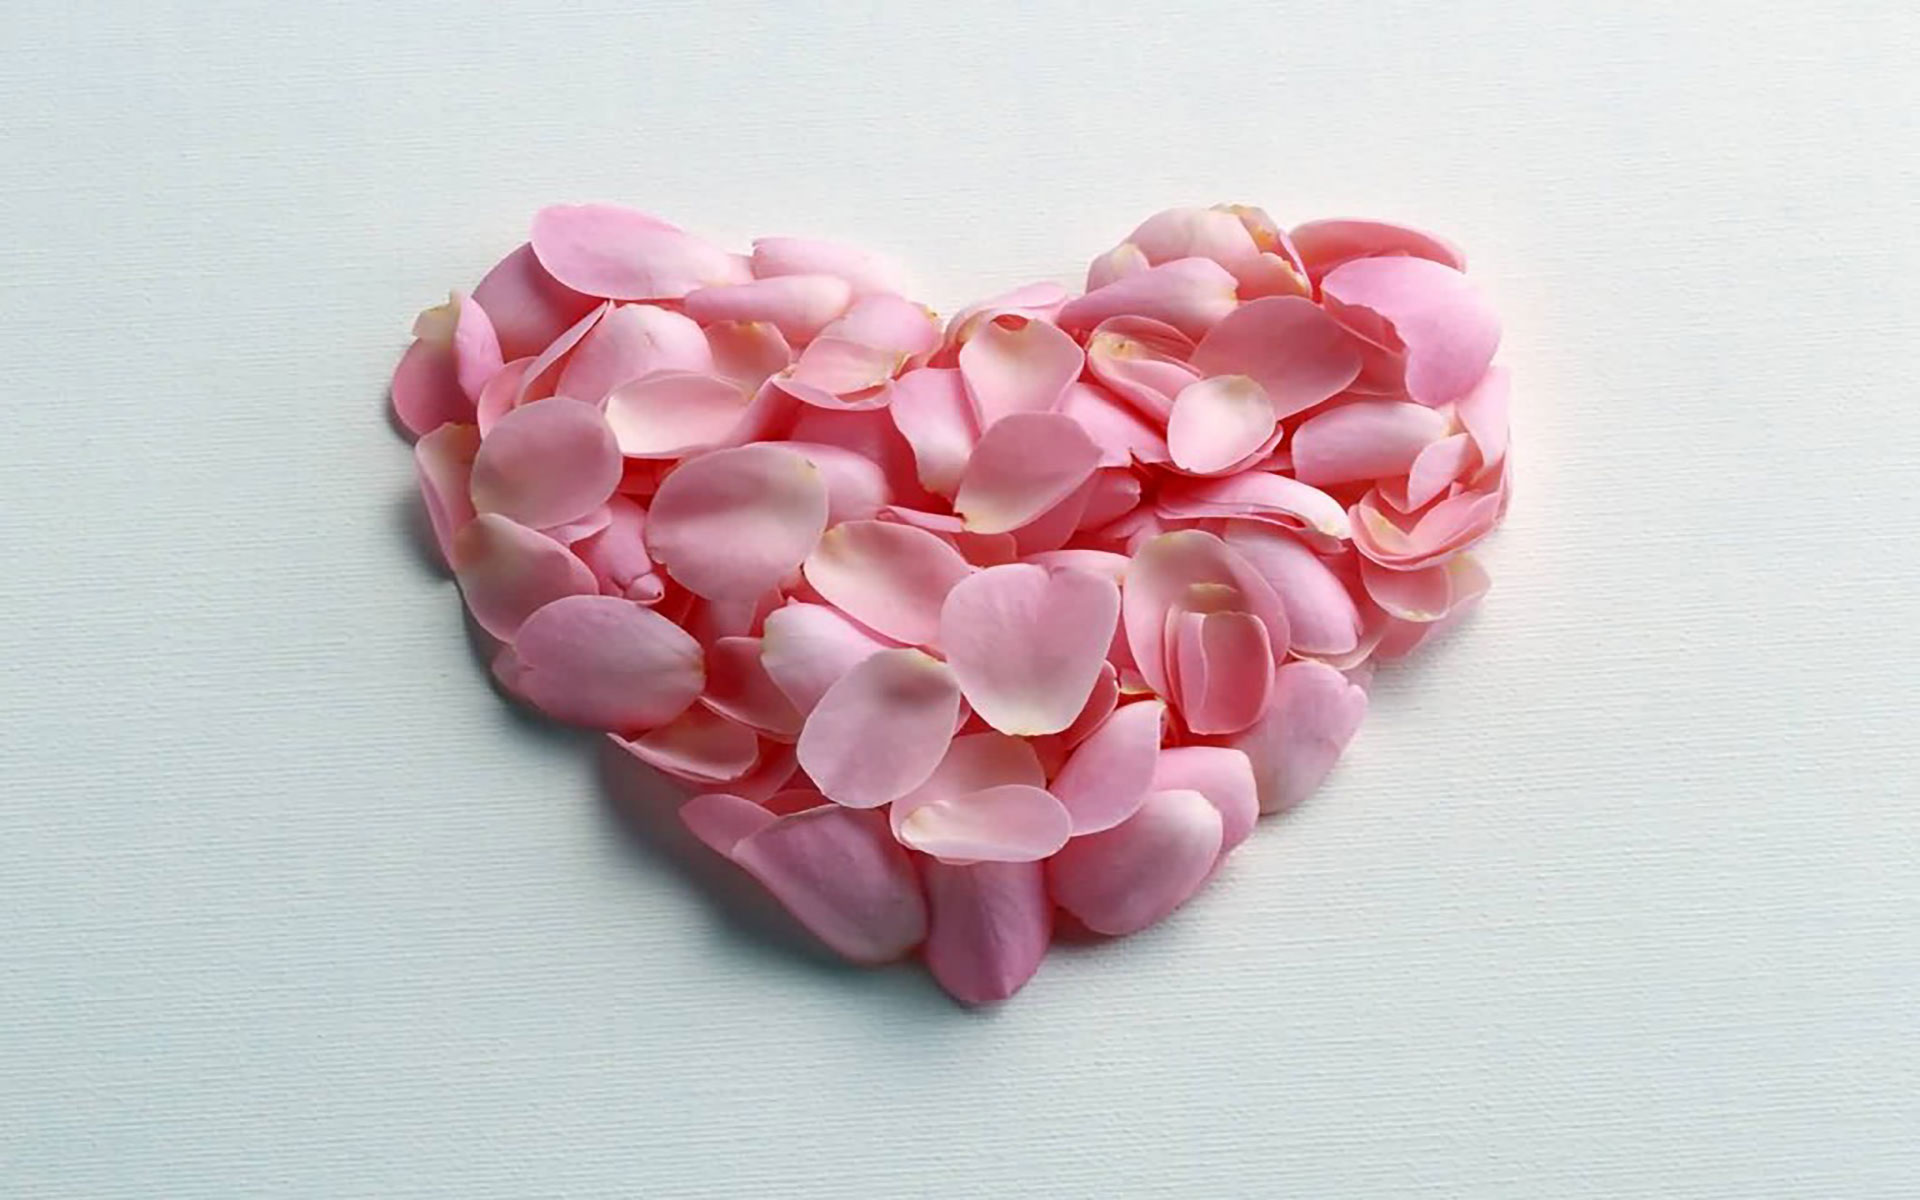 Cute Love Heart wallpaper HD -Free Pink Heart Wallpapers